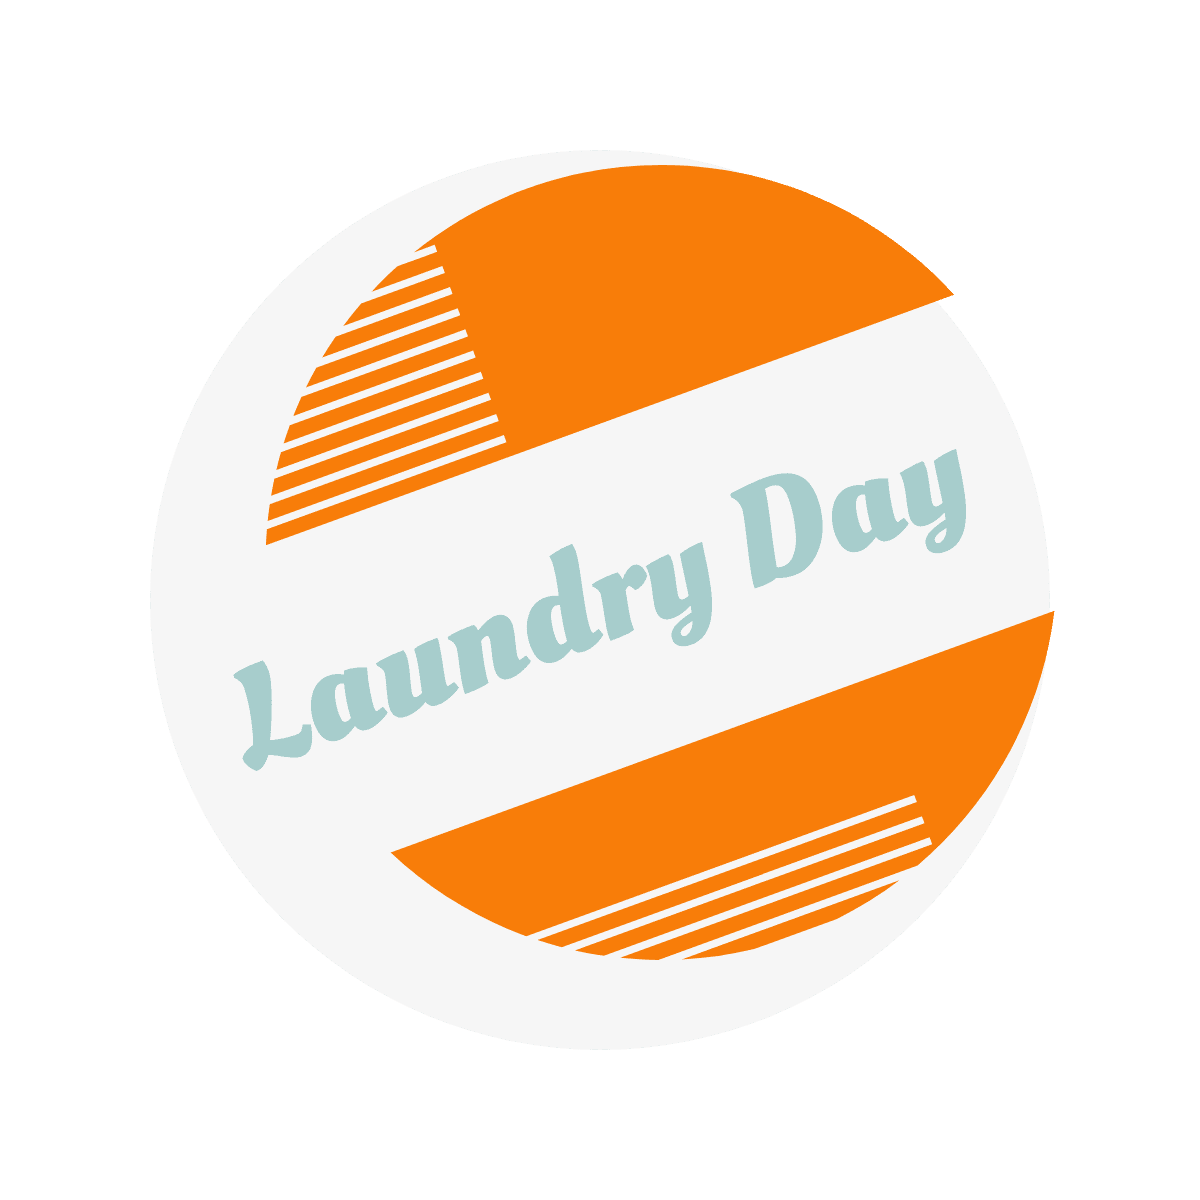 Laundry Day 